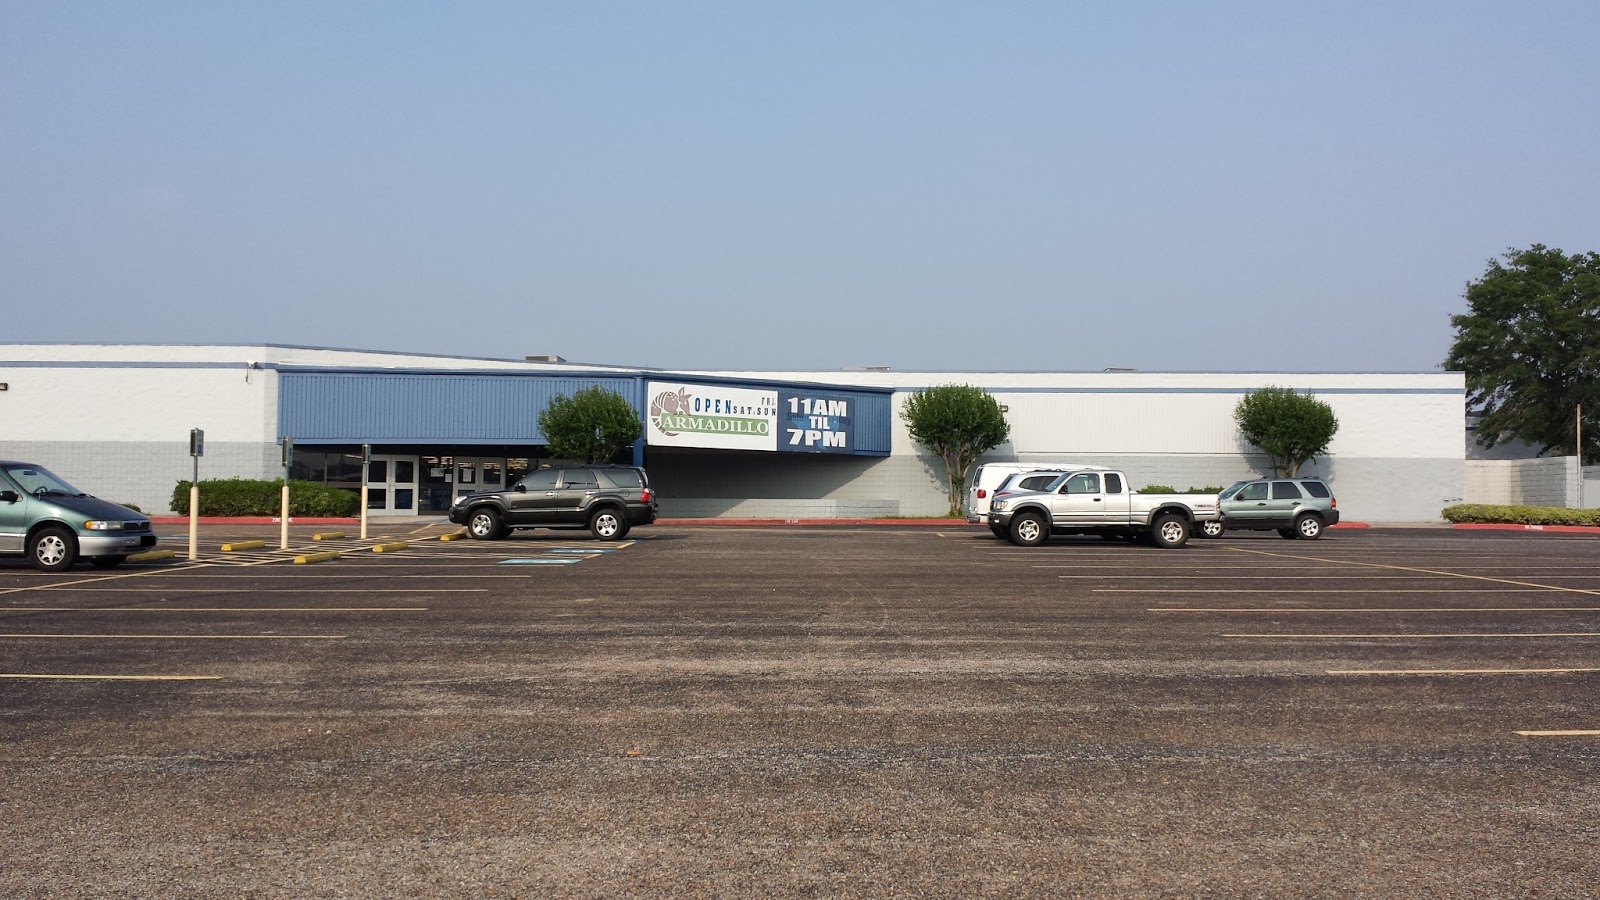 The Louisiana And Texas Retail Blogspot Buyer S Market Mall North